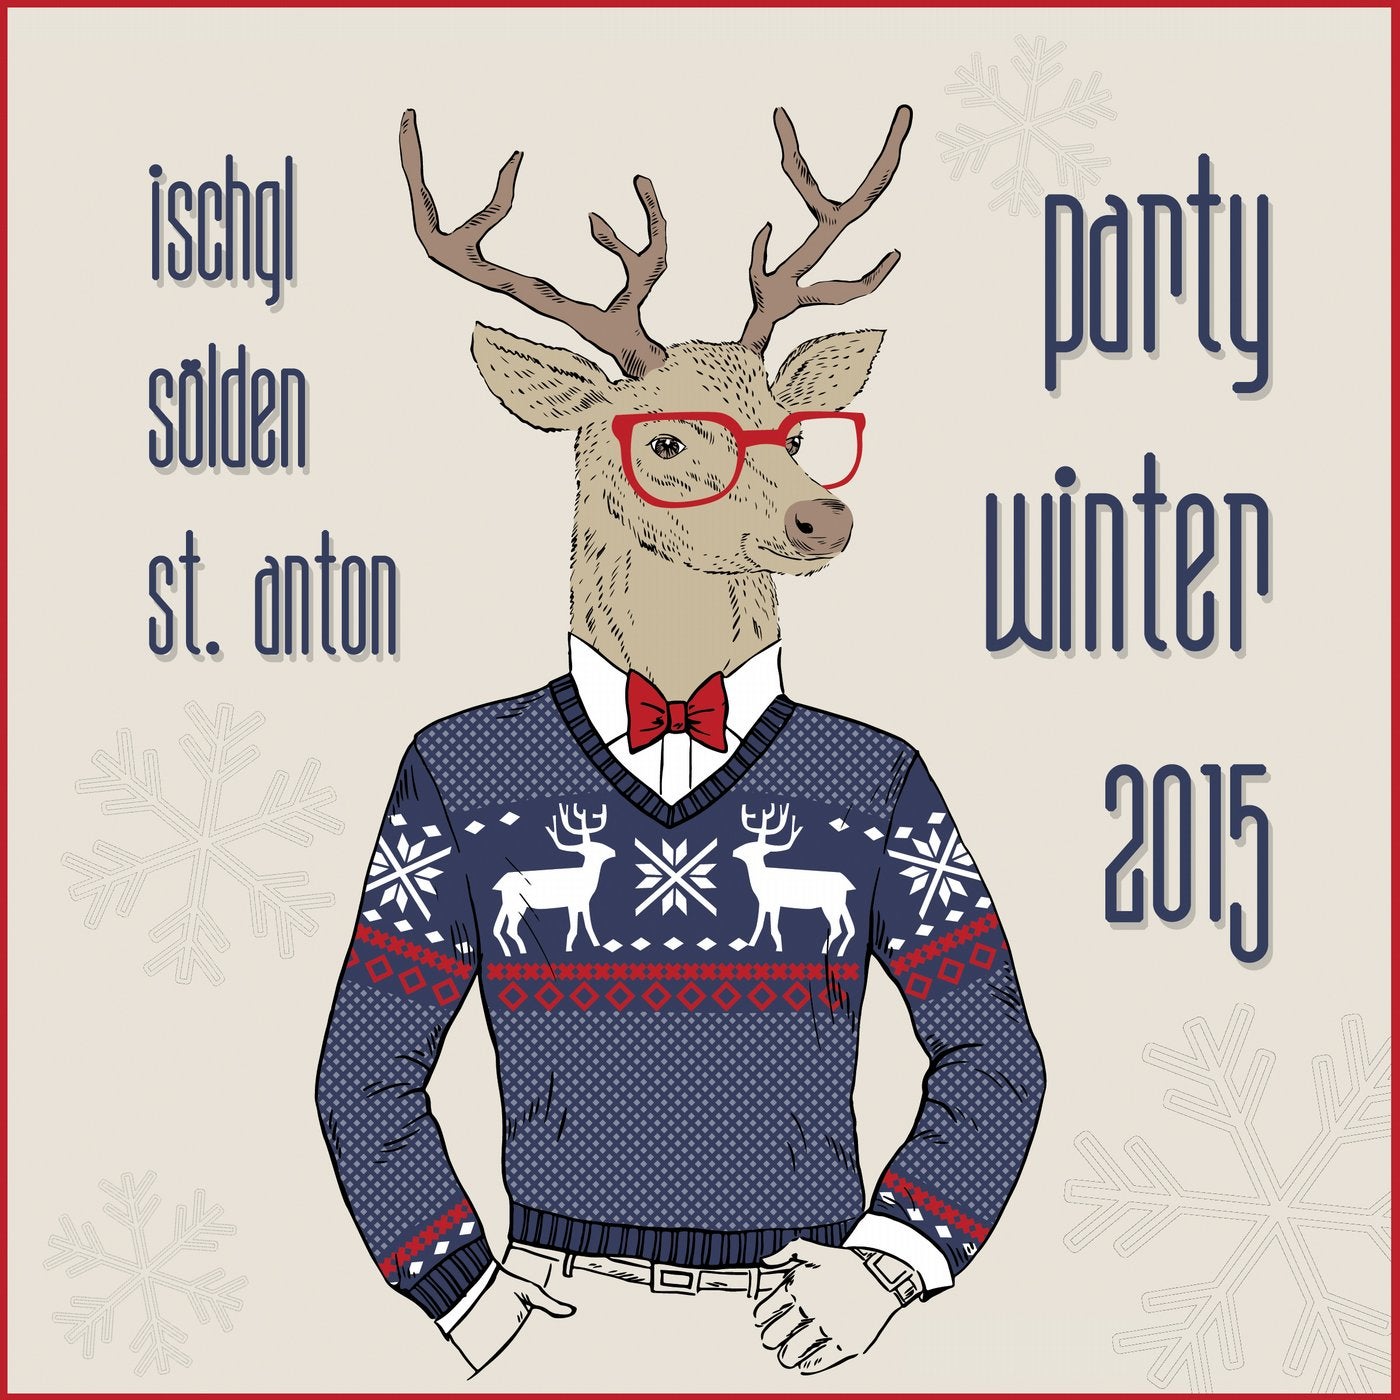 Ischgl, Sölden, St. Anton - Party Winter 2015